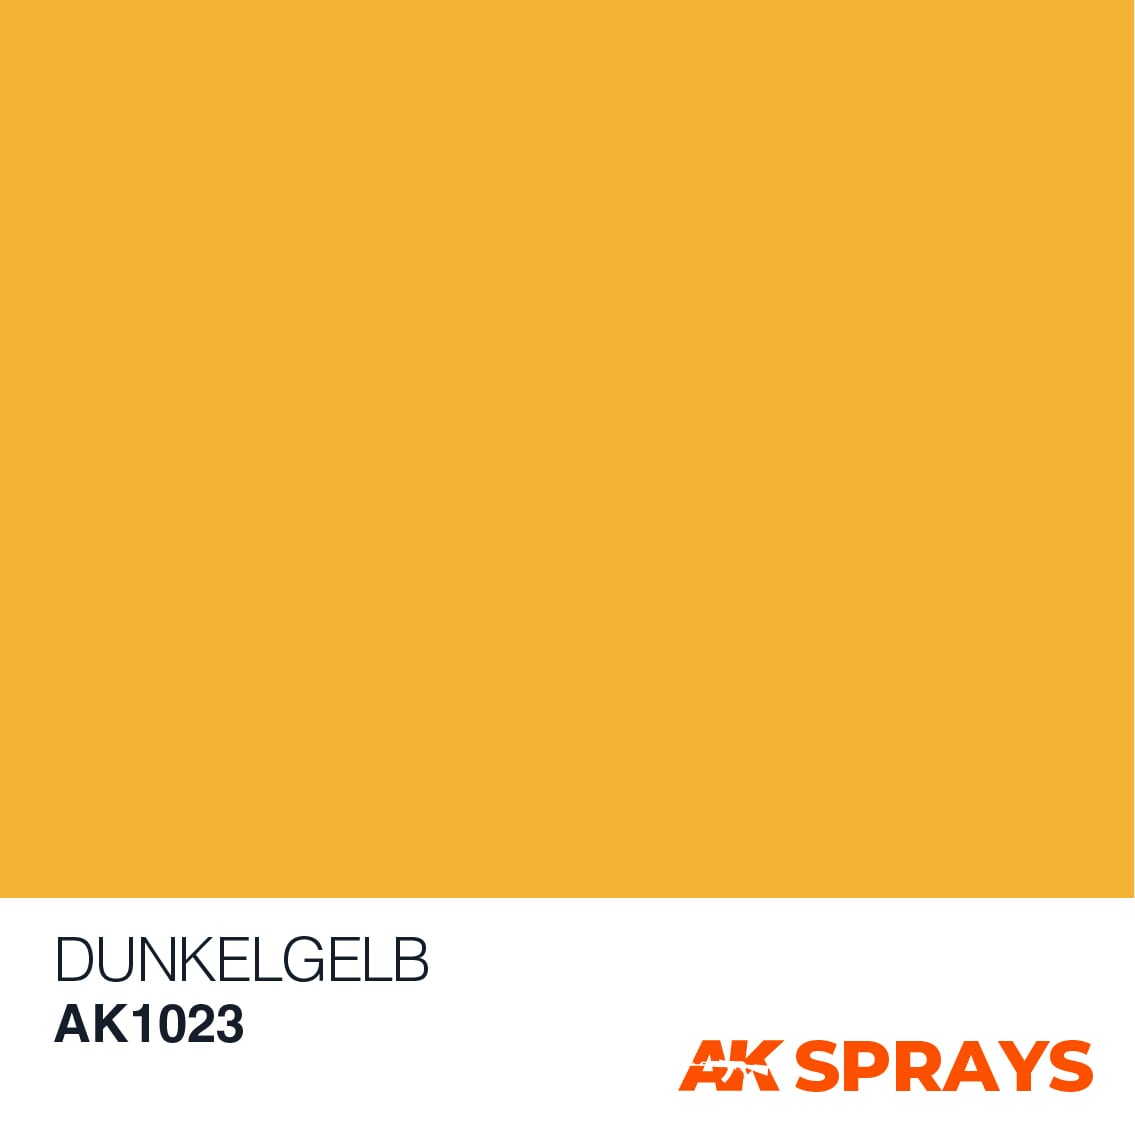 AK1023: Dunkelgelb Yellow Spray Paint (150mL)